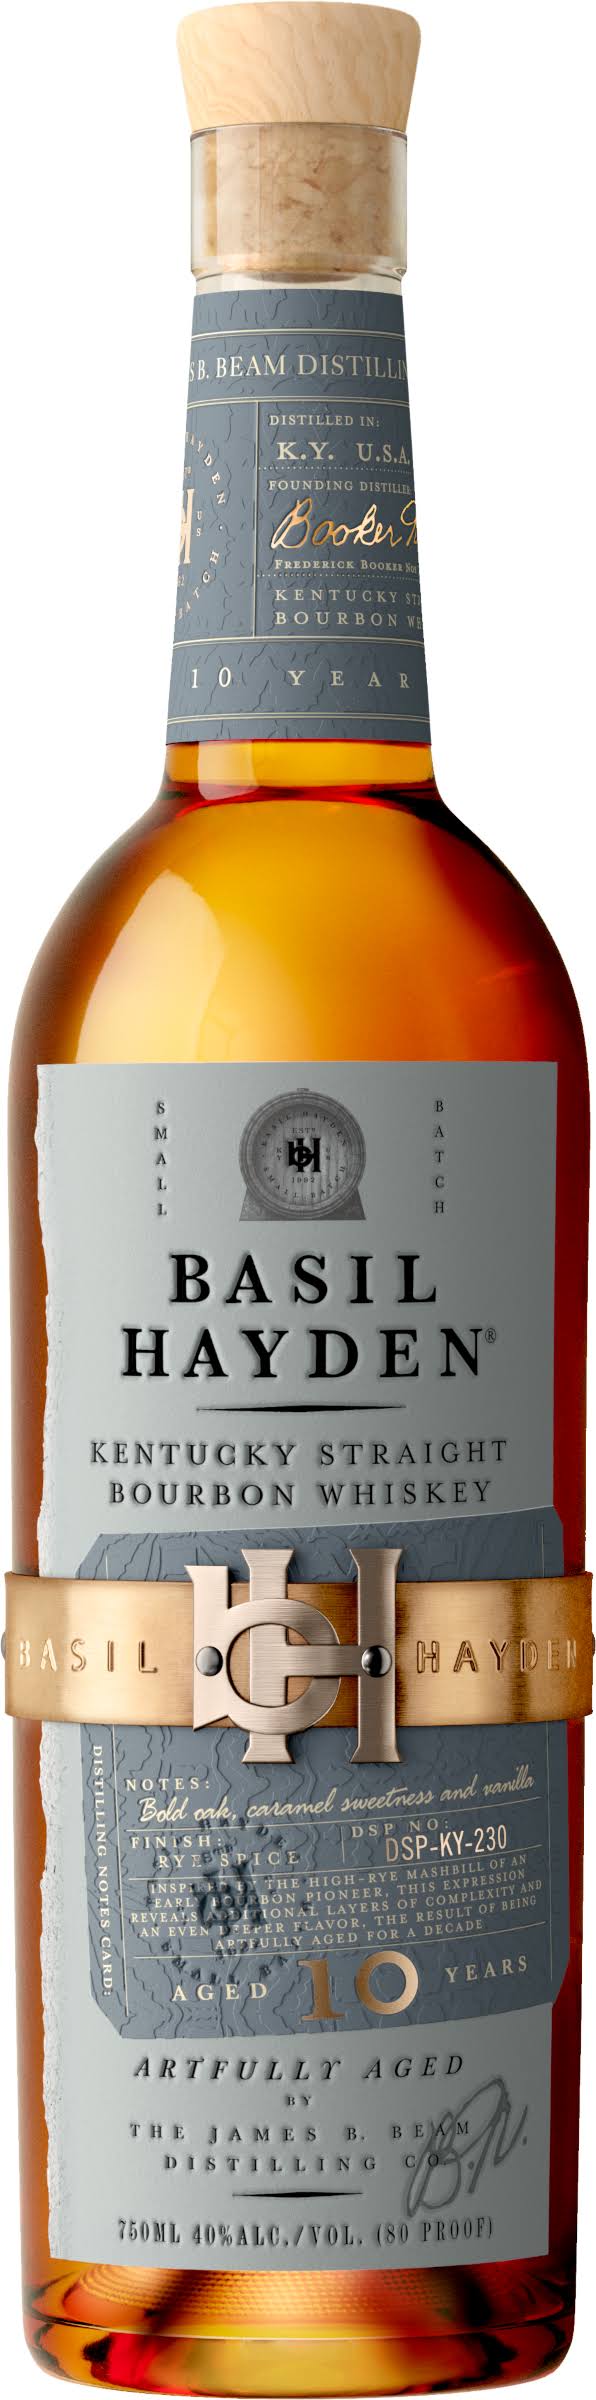 Basil Hayden's Bourbon Whiskey 10 Year - 750ml